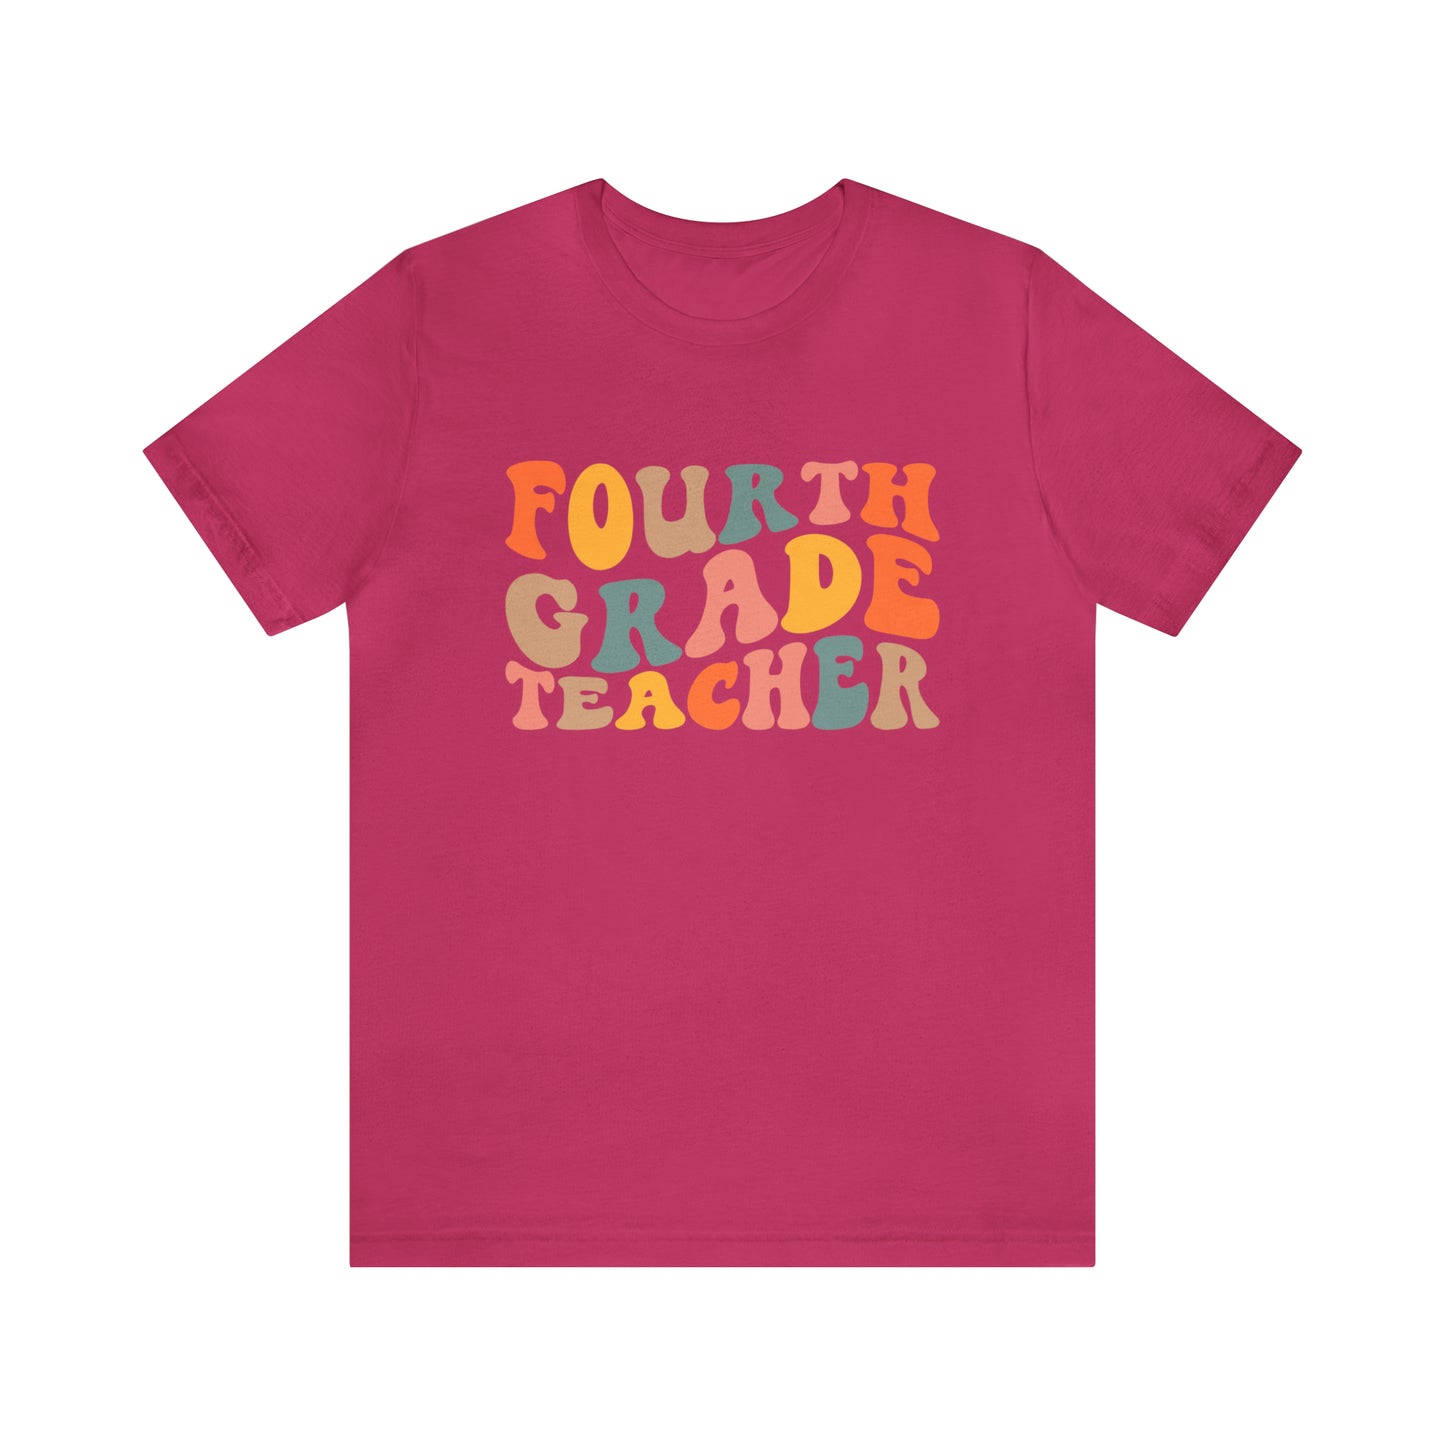 Colorful Groovy Retro "Fourth Grade Teacher  Tee